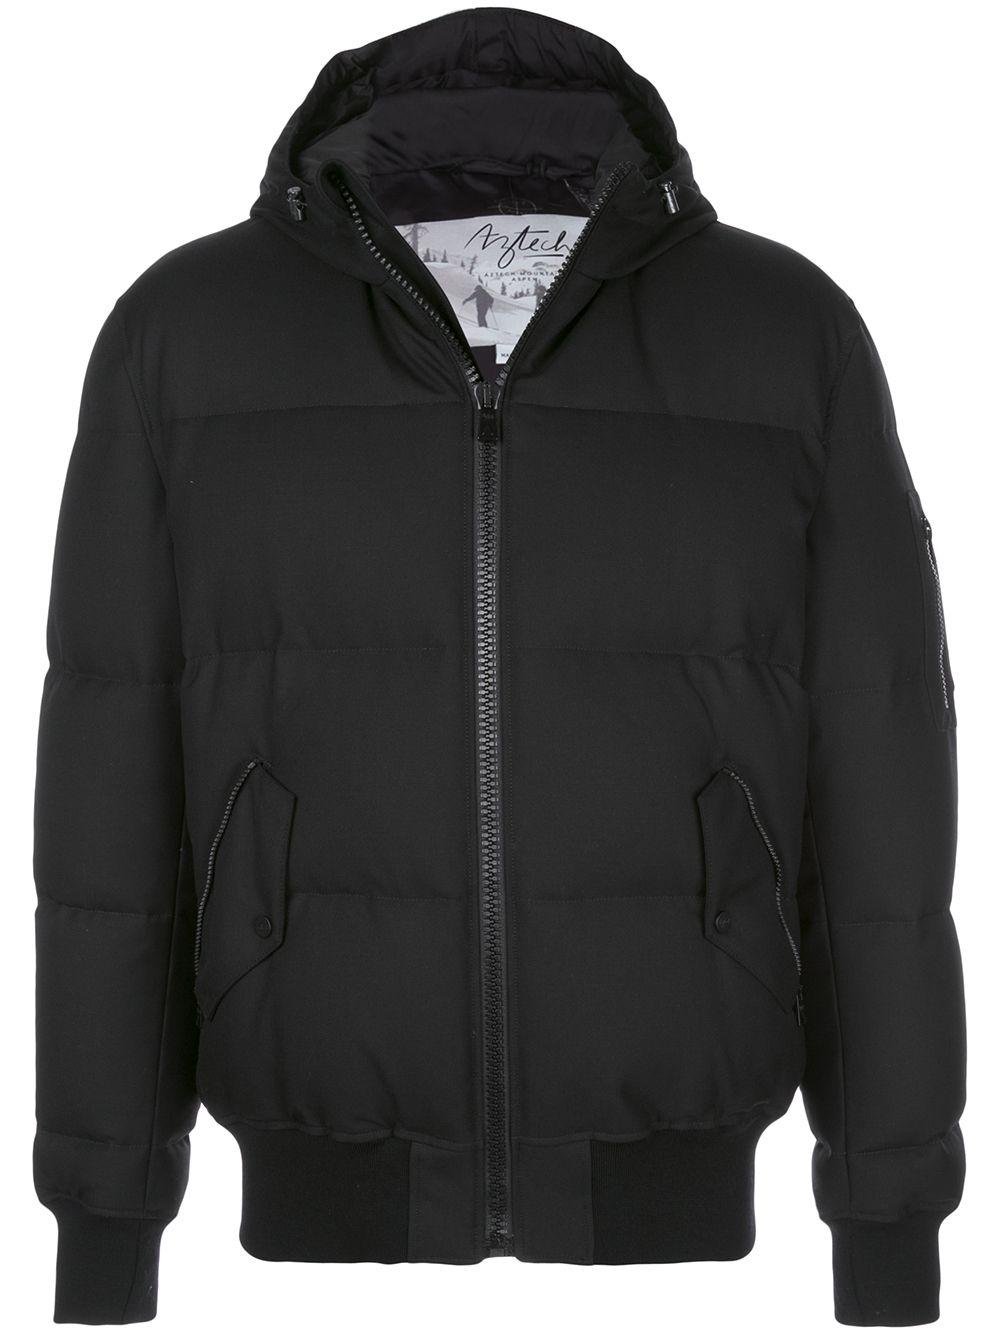 Shadow Mountain puffer jacket by AZTECH MOUNTAIN